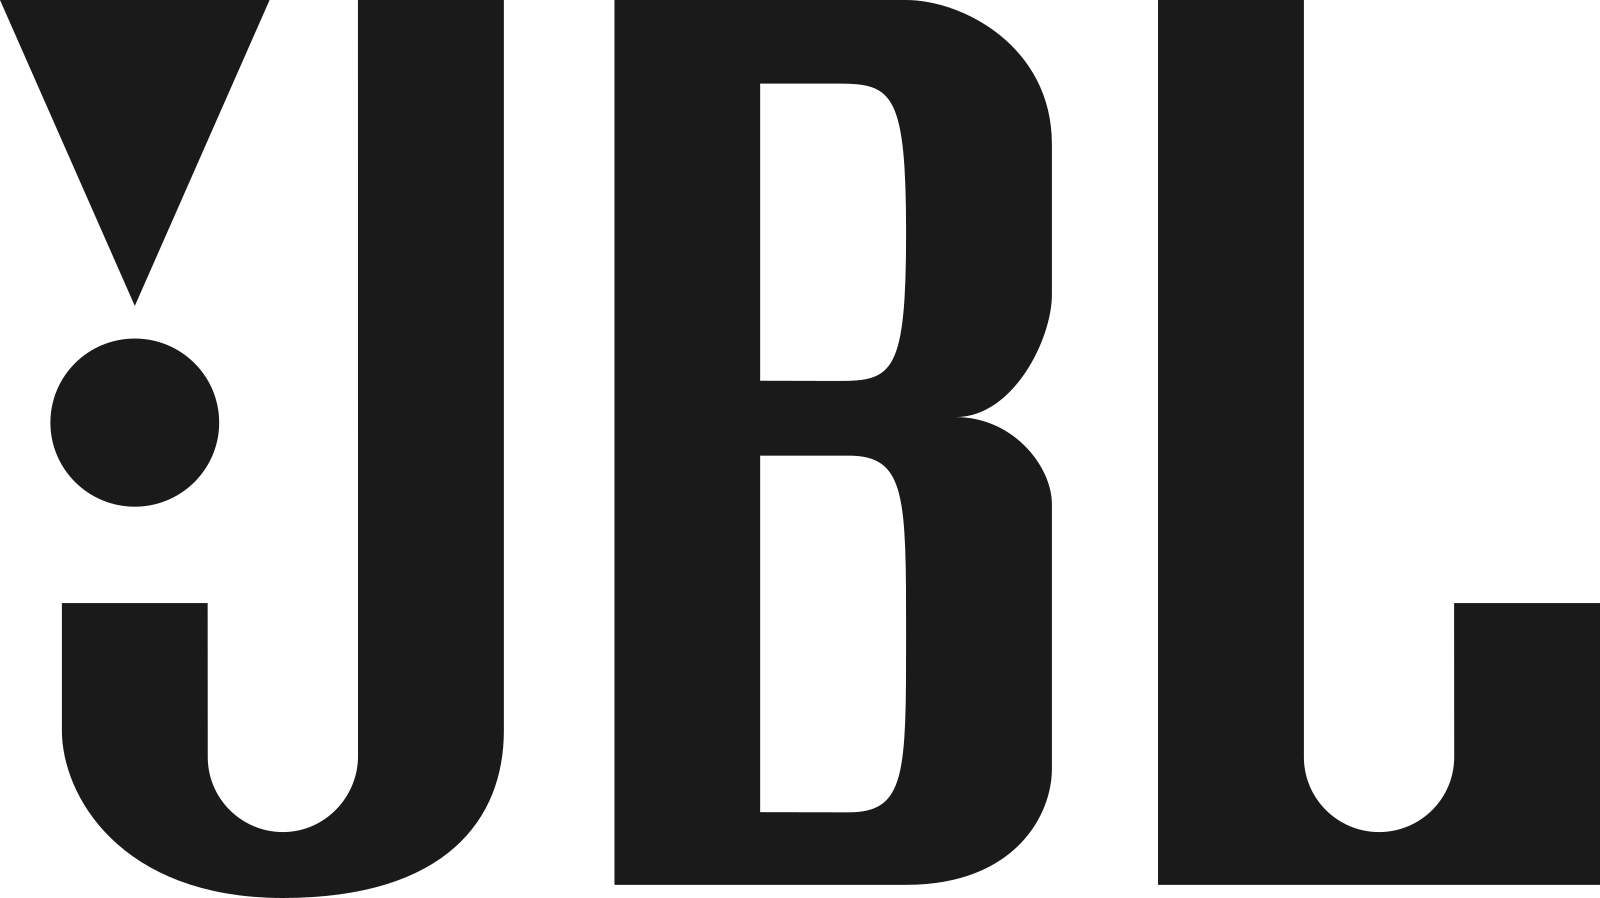 jbl-logo-9-1